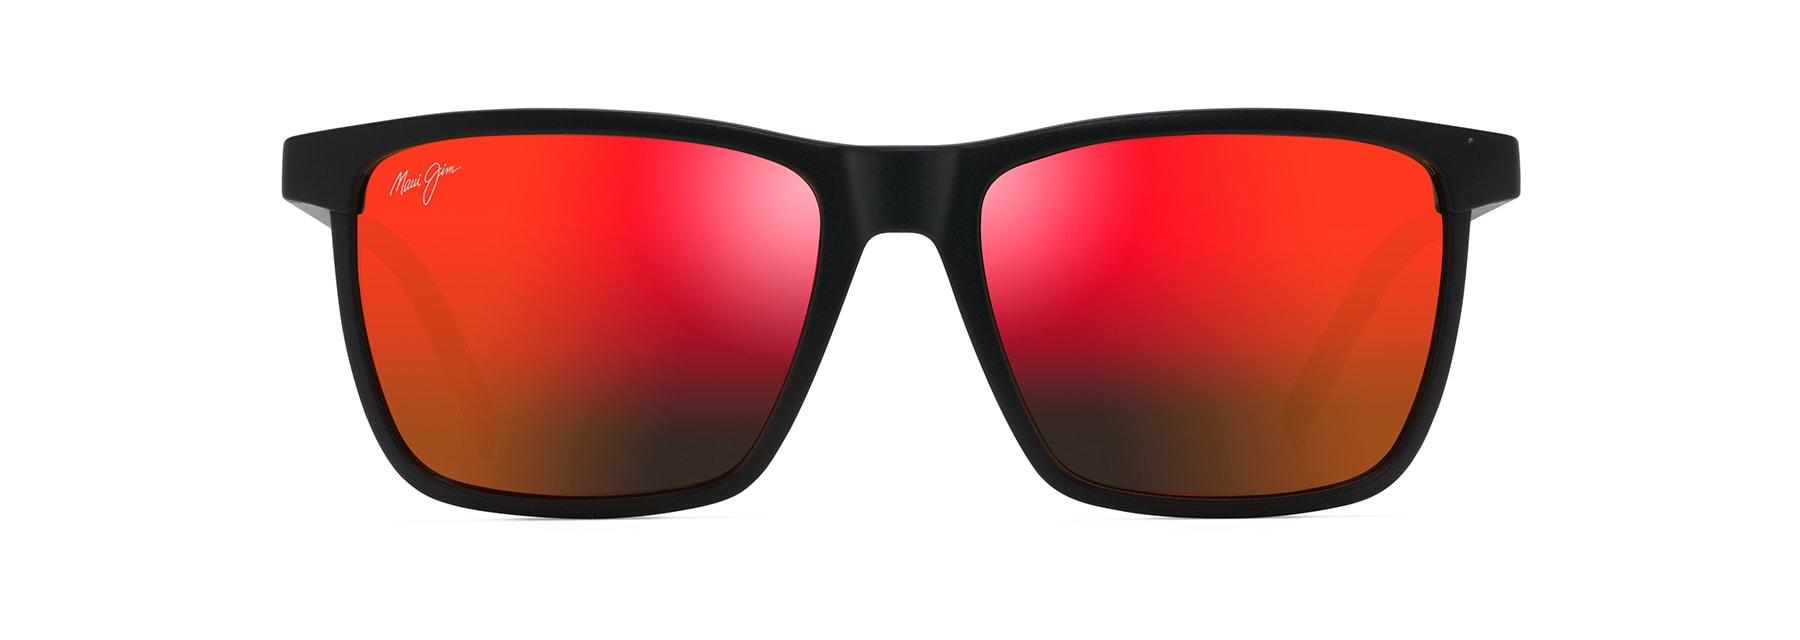 One Way Polarized - Directional Style | Shop Maui Jim Sunglasses